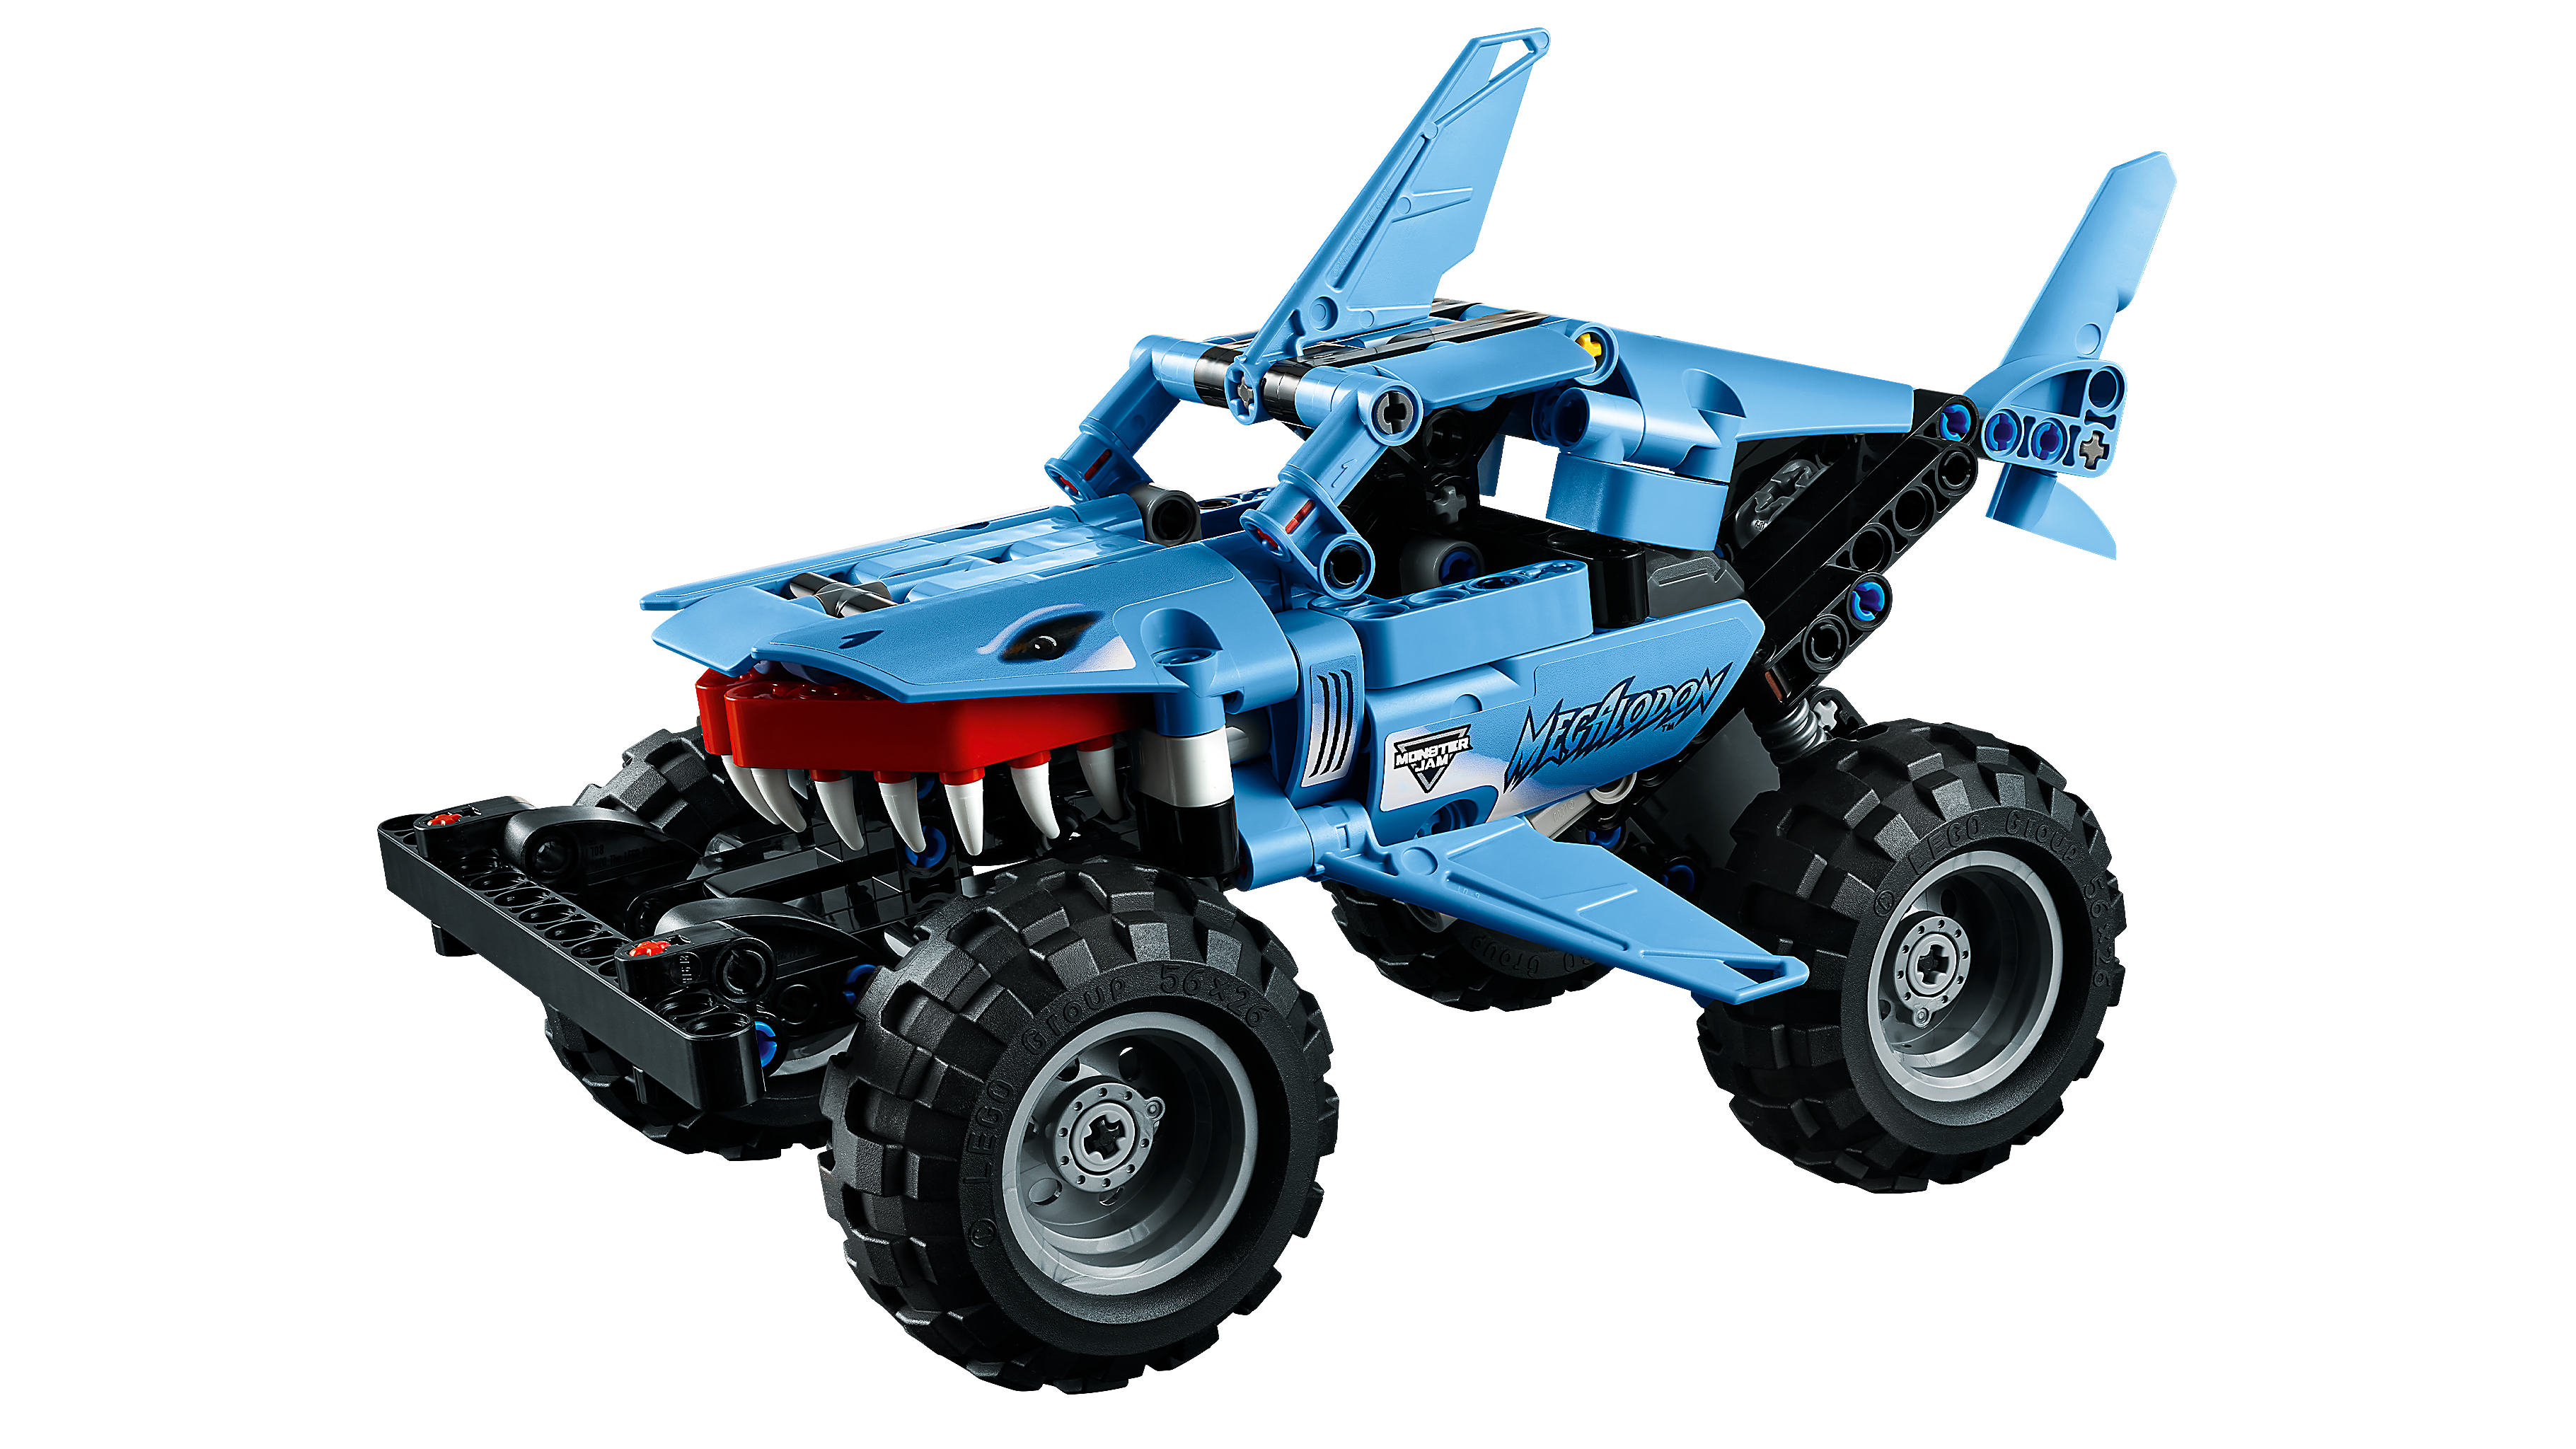 Monster Trucks Para Meninos, Veículos Retráteis, Carros Para